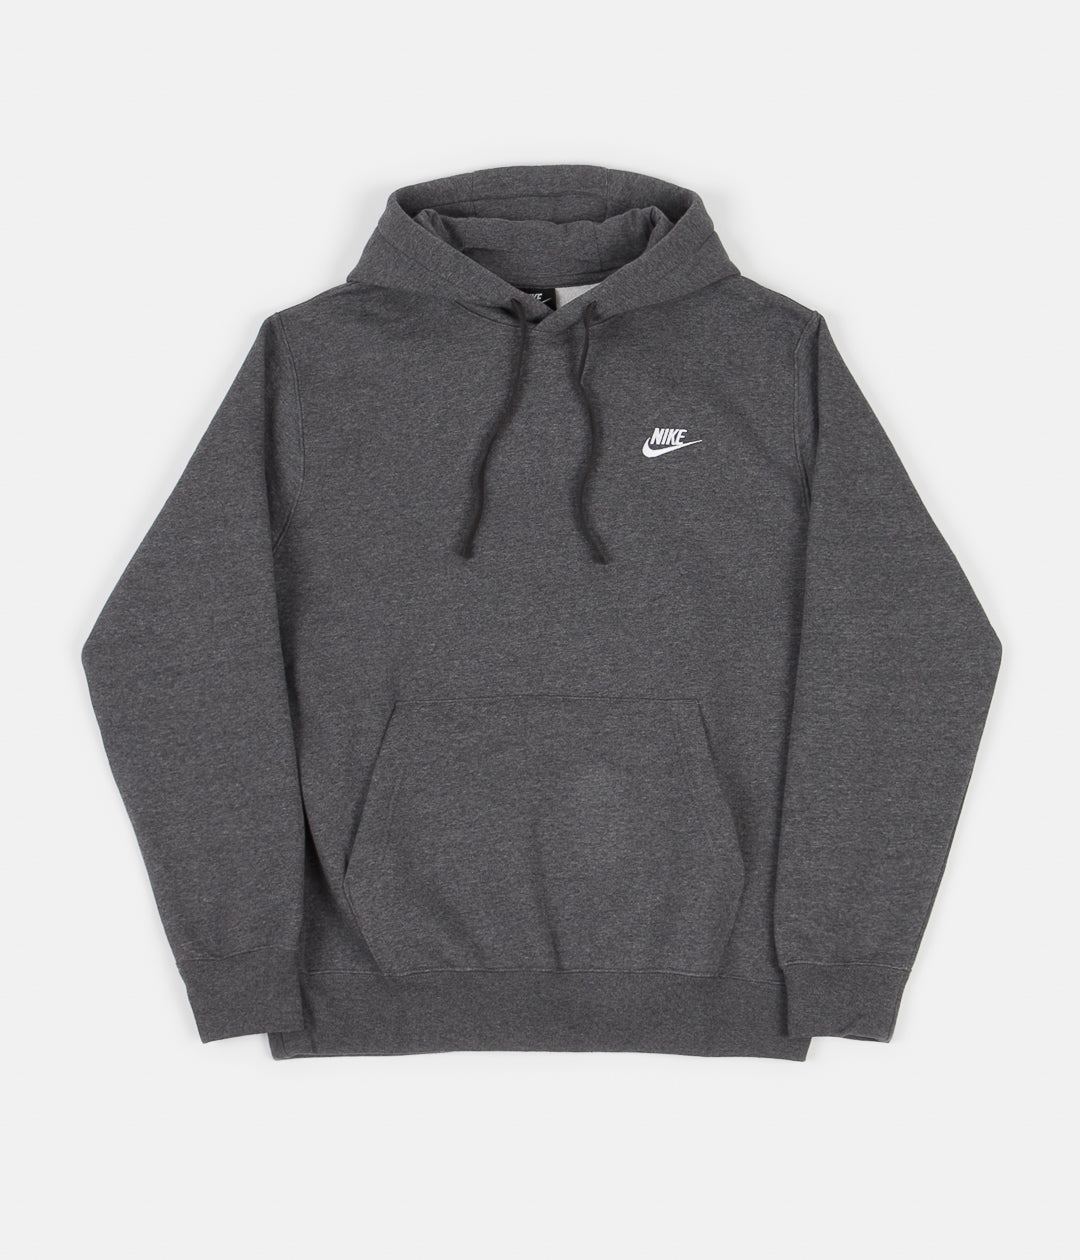 nike charcoal grey hoodie